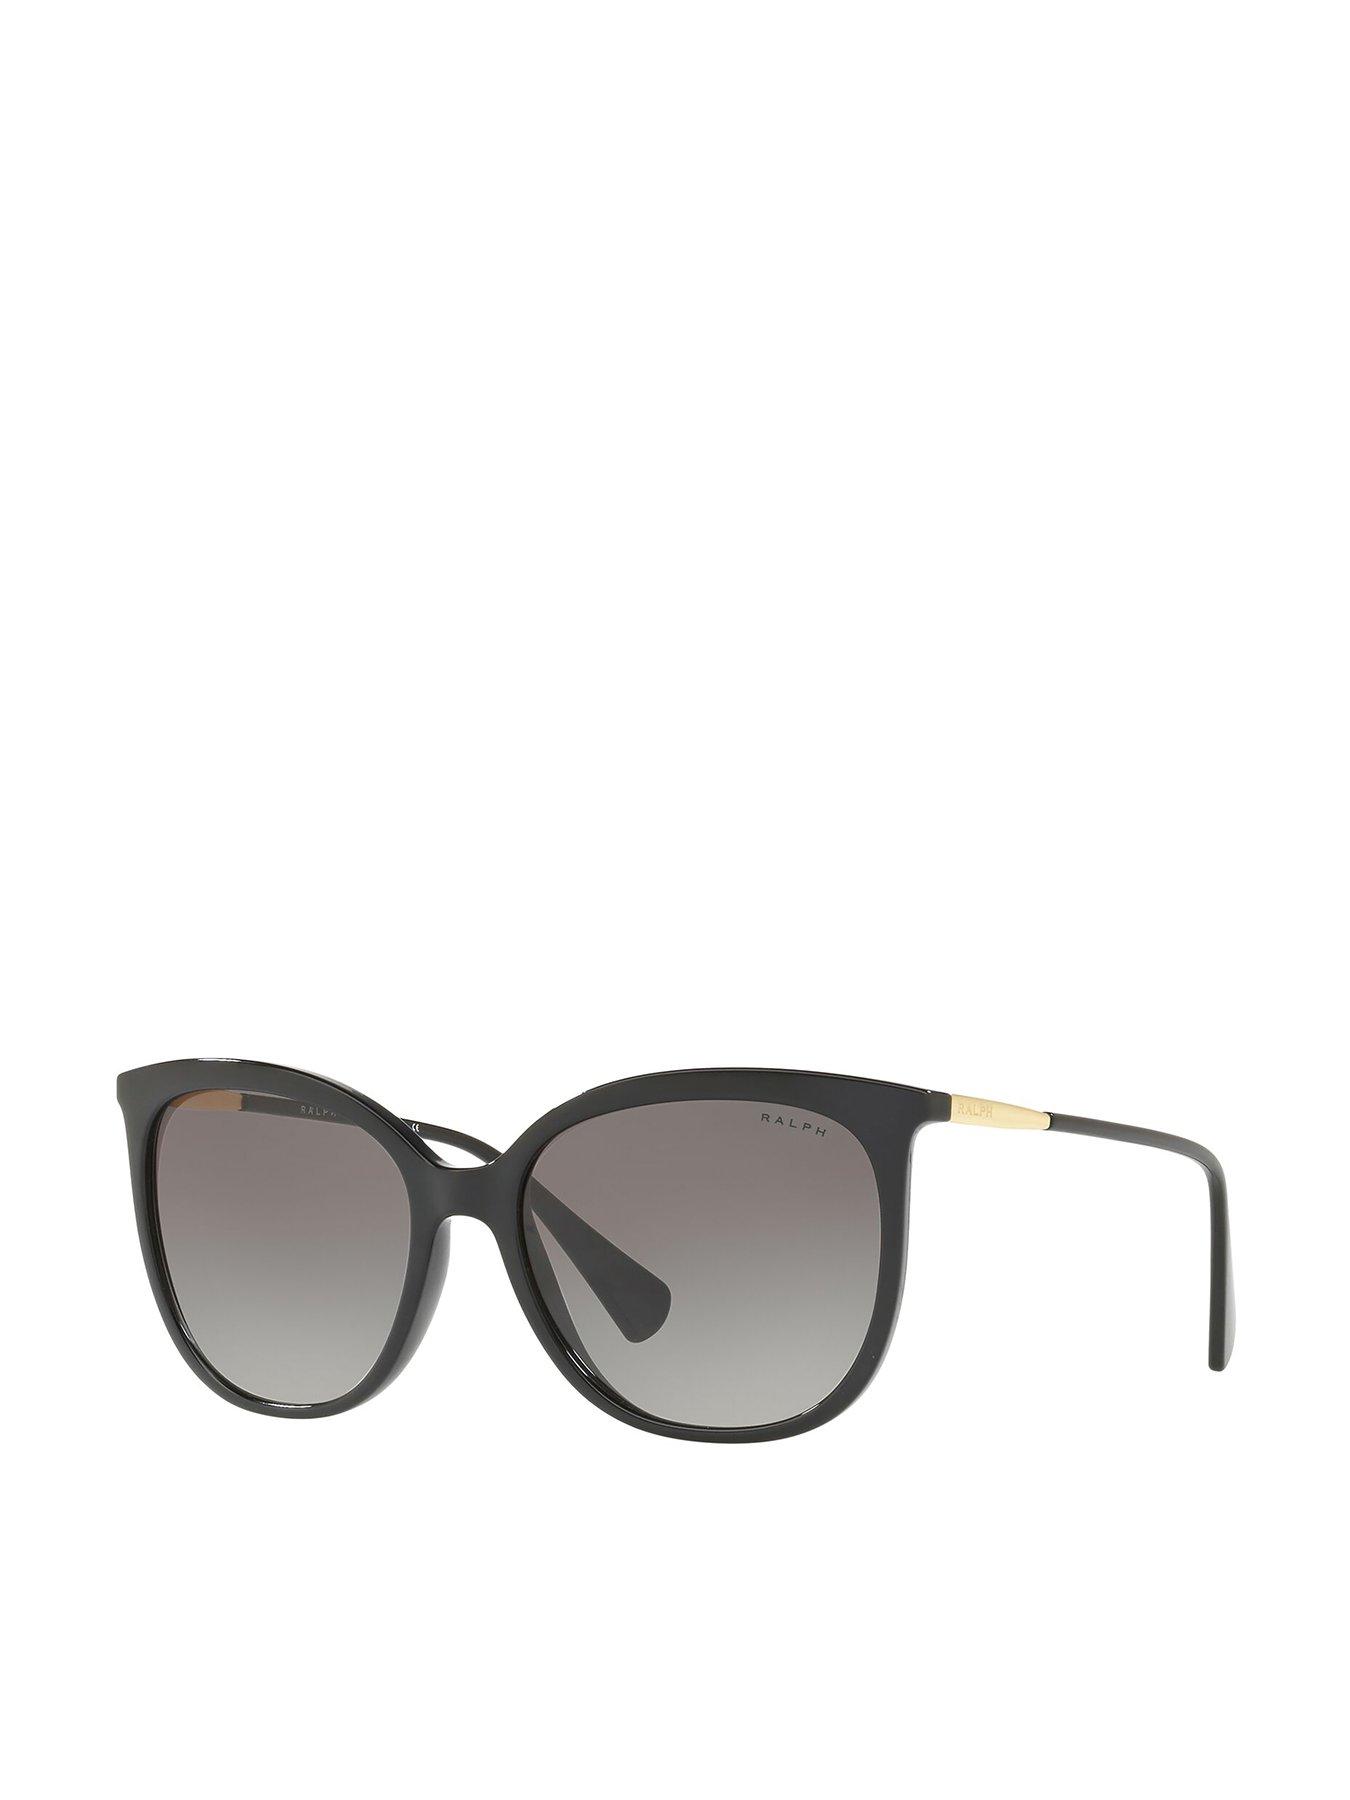 Ralph Lauren Ra5248 Square Sunglasses 